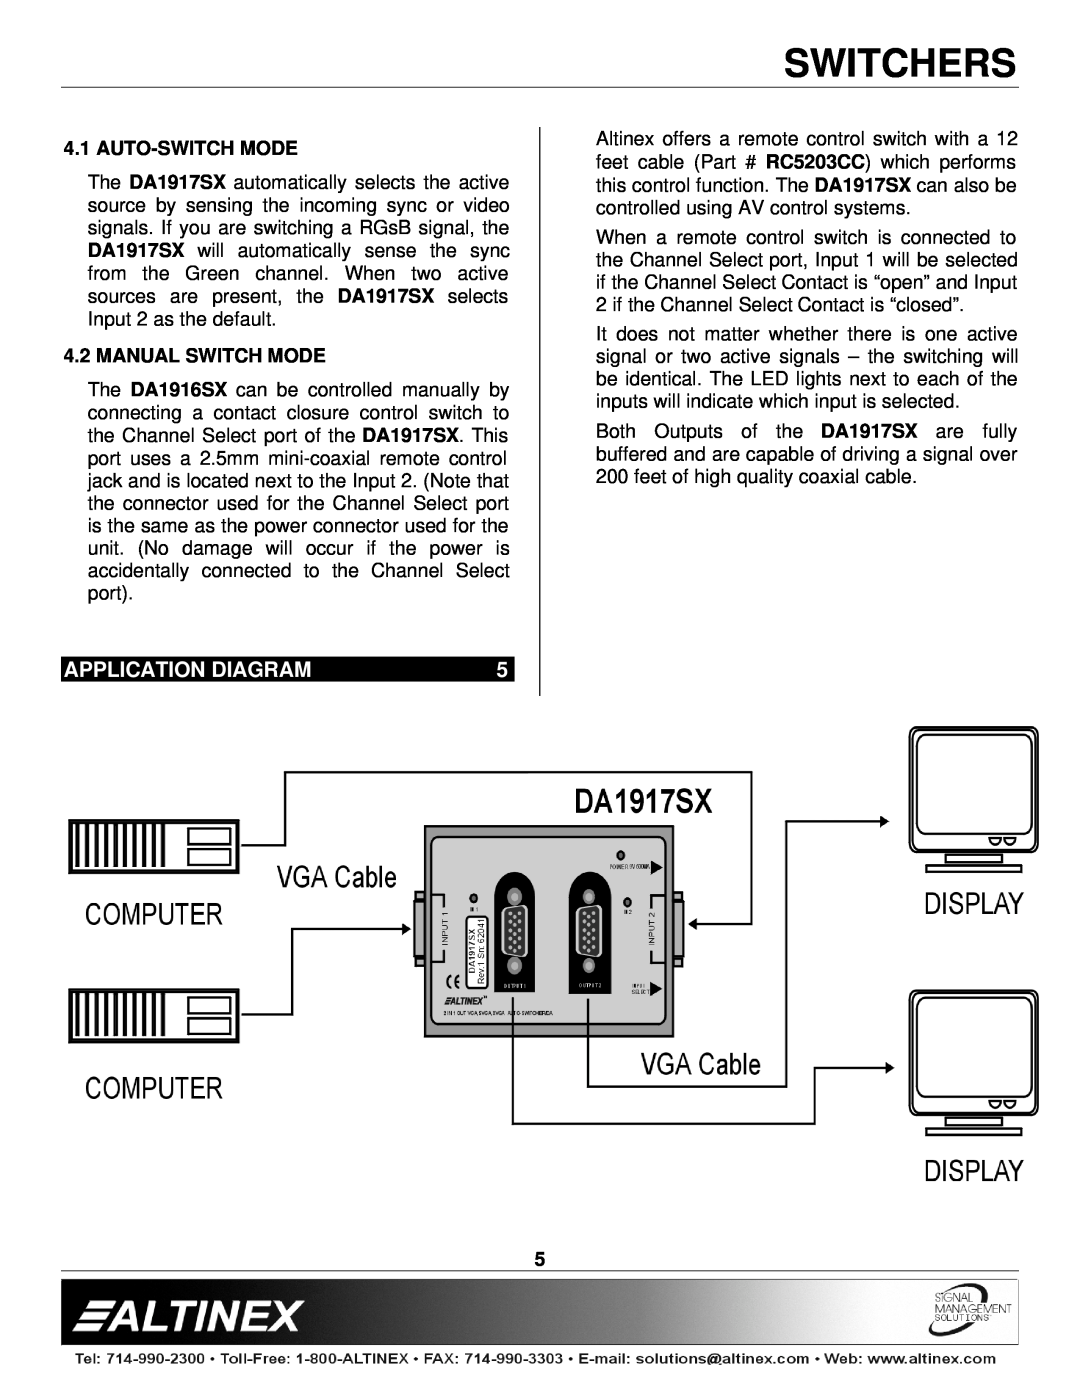 Altinex DA1917SX manual Application Diagram, Auto-Switch Mode, Manual Switch Mode, Switchers 